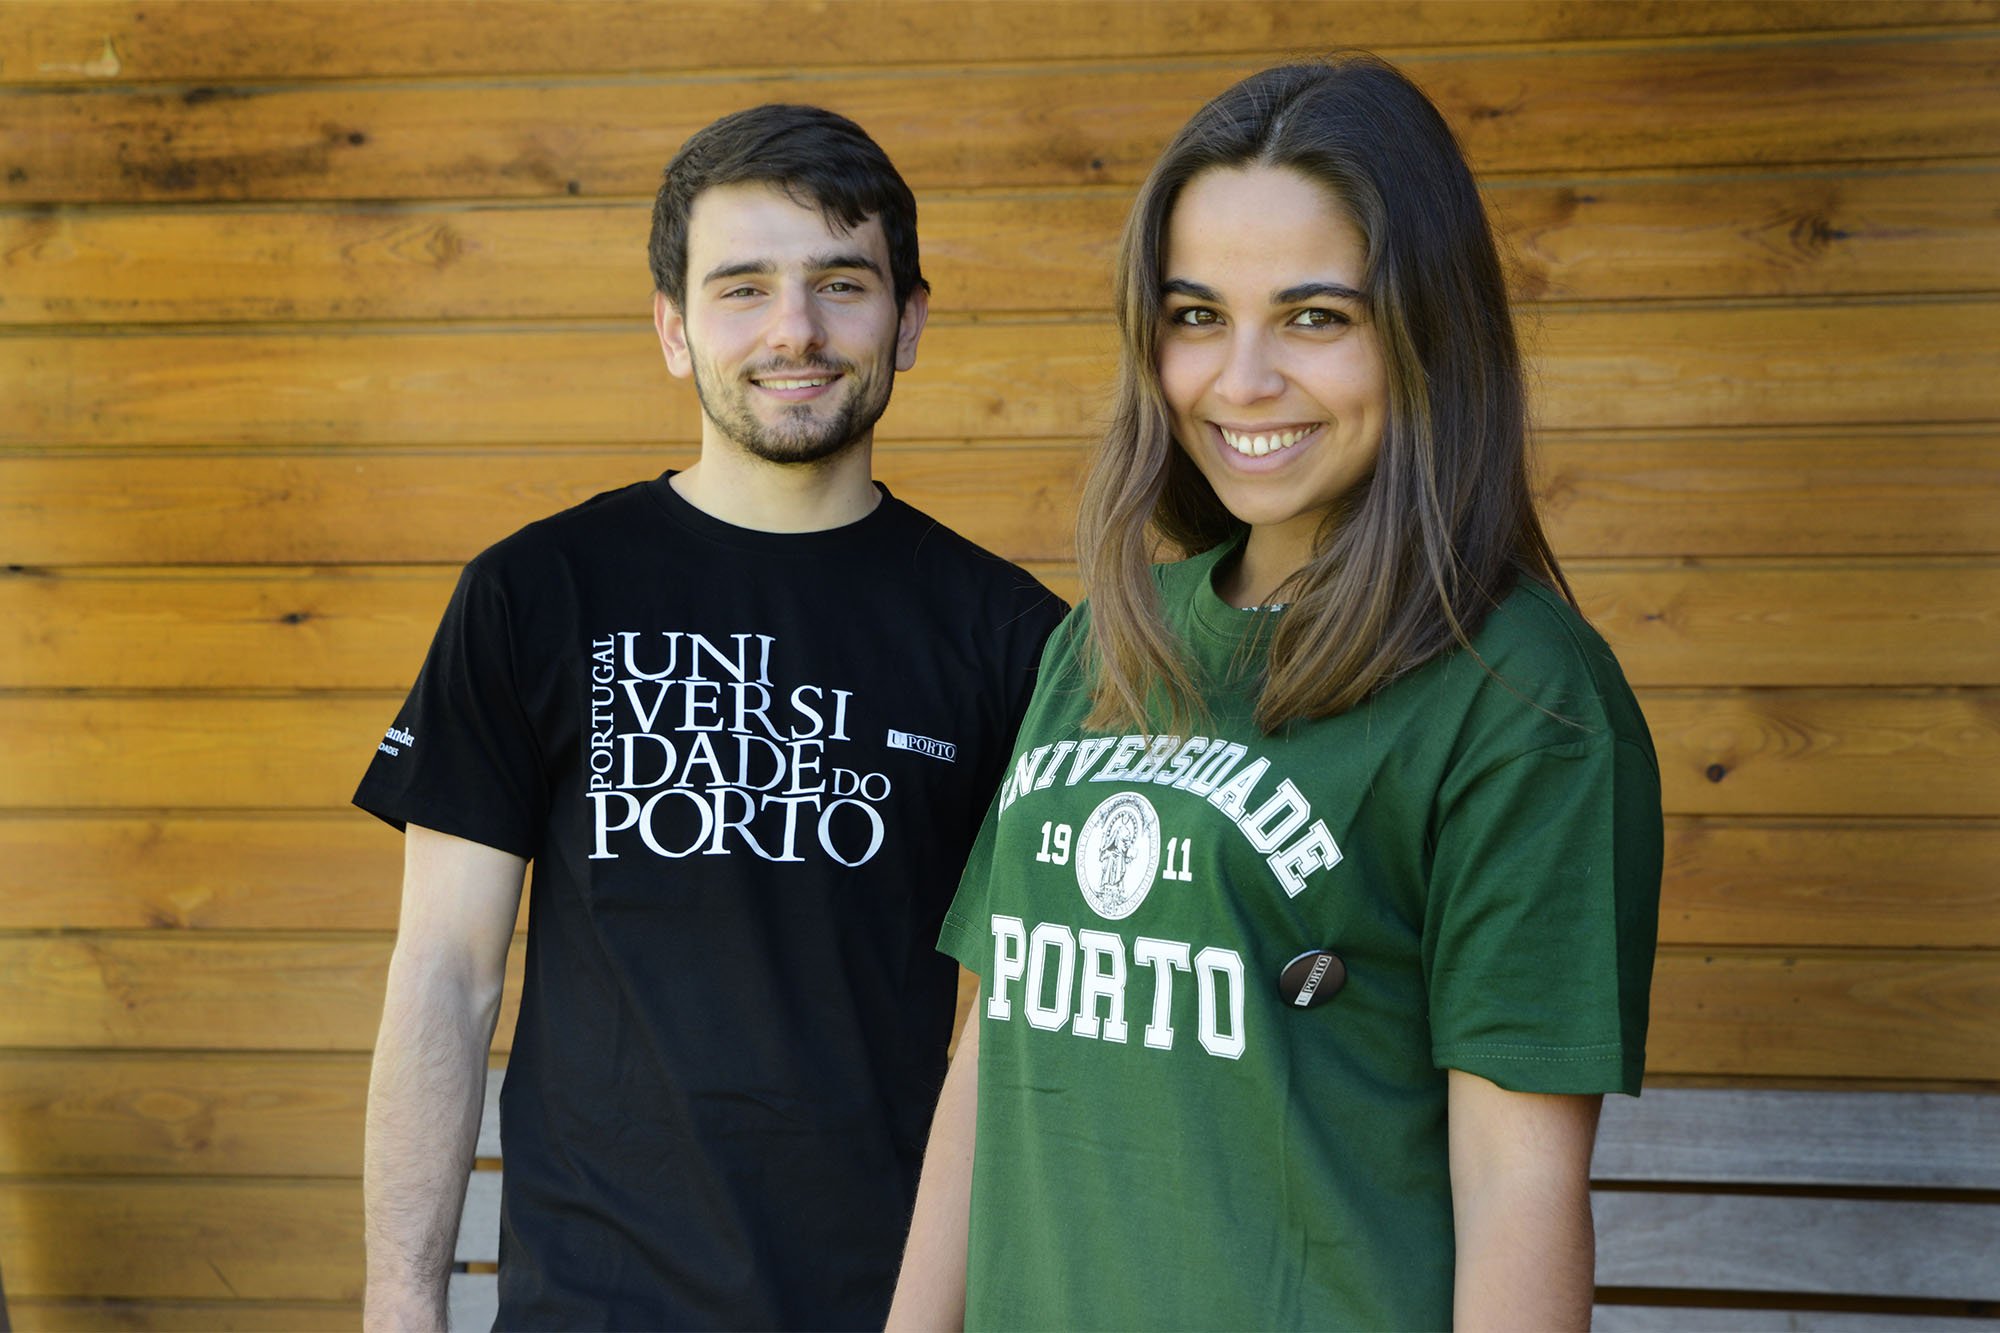 Two students wearing the U.Porto shirts